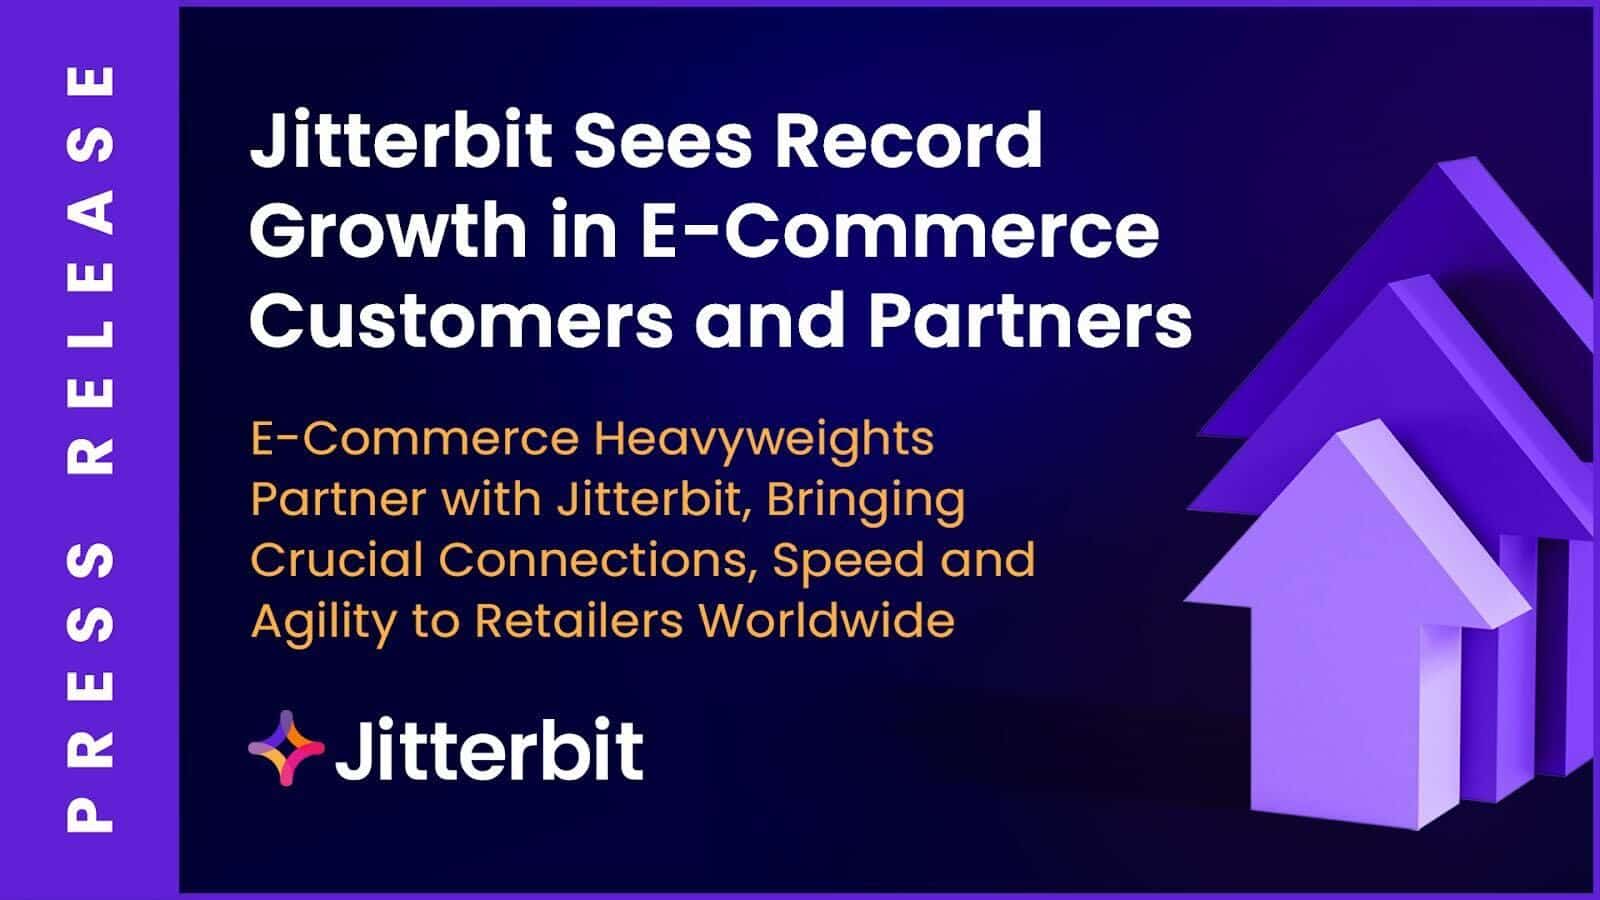 Crescimento recorde para Jitterbit